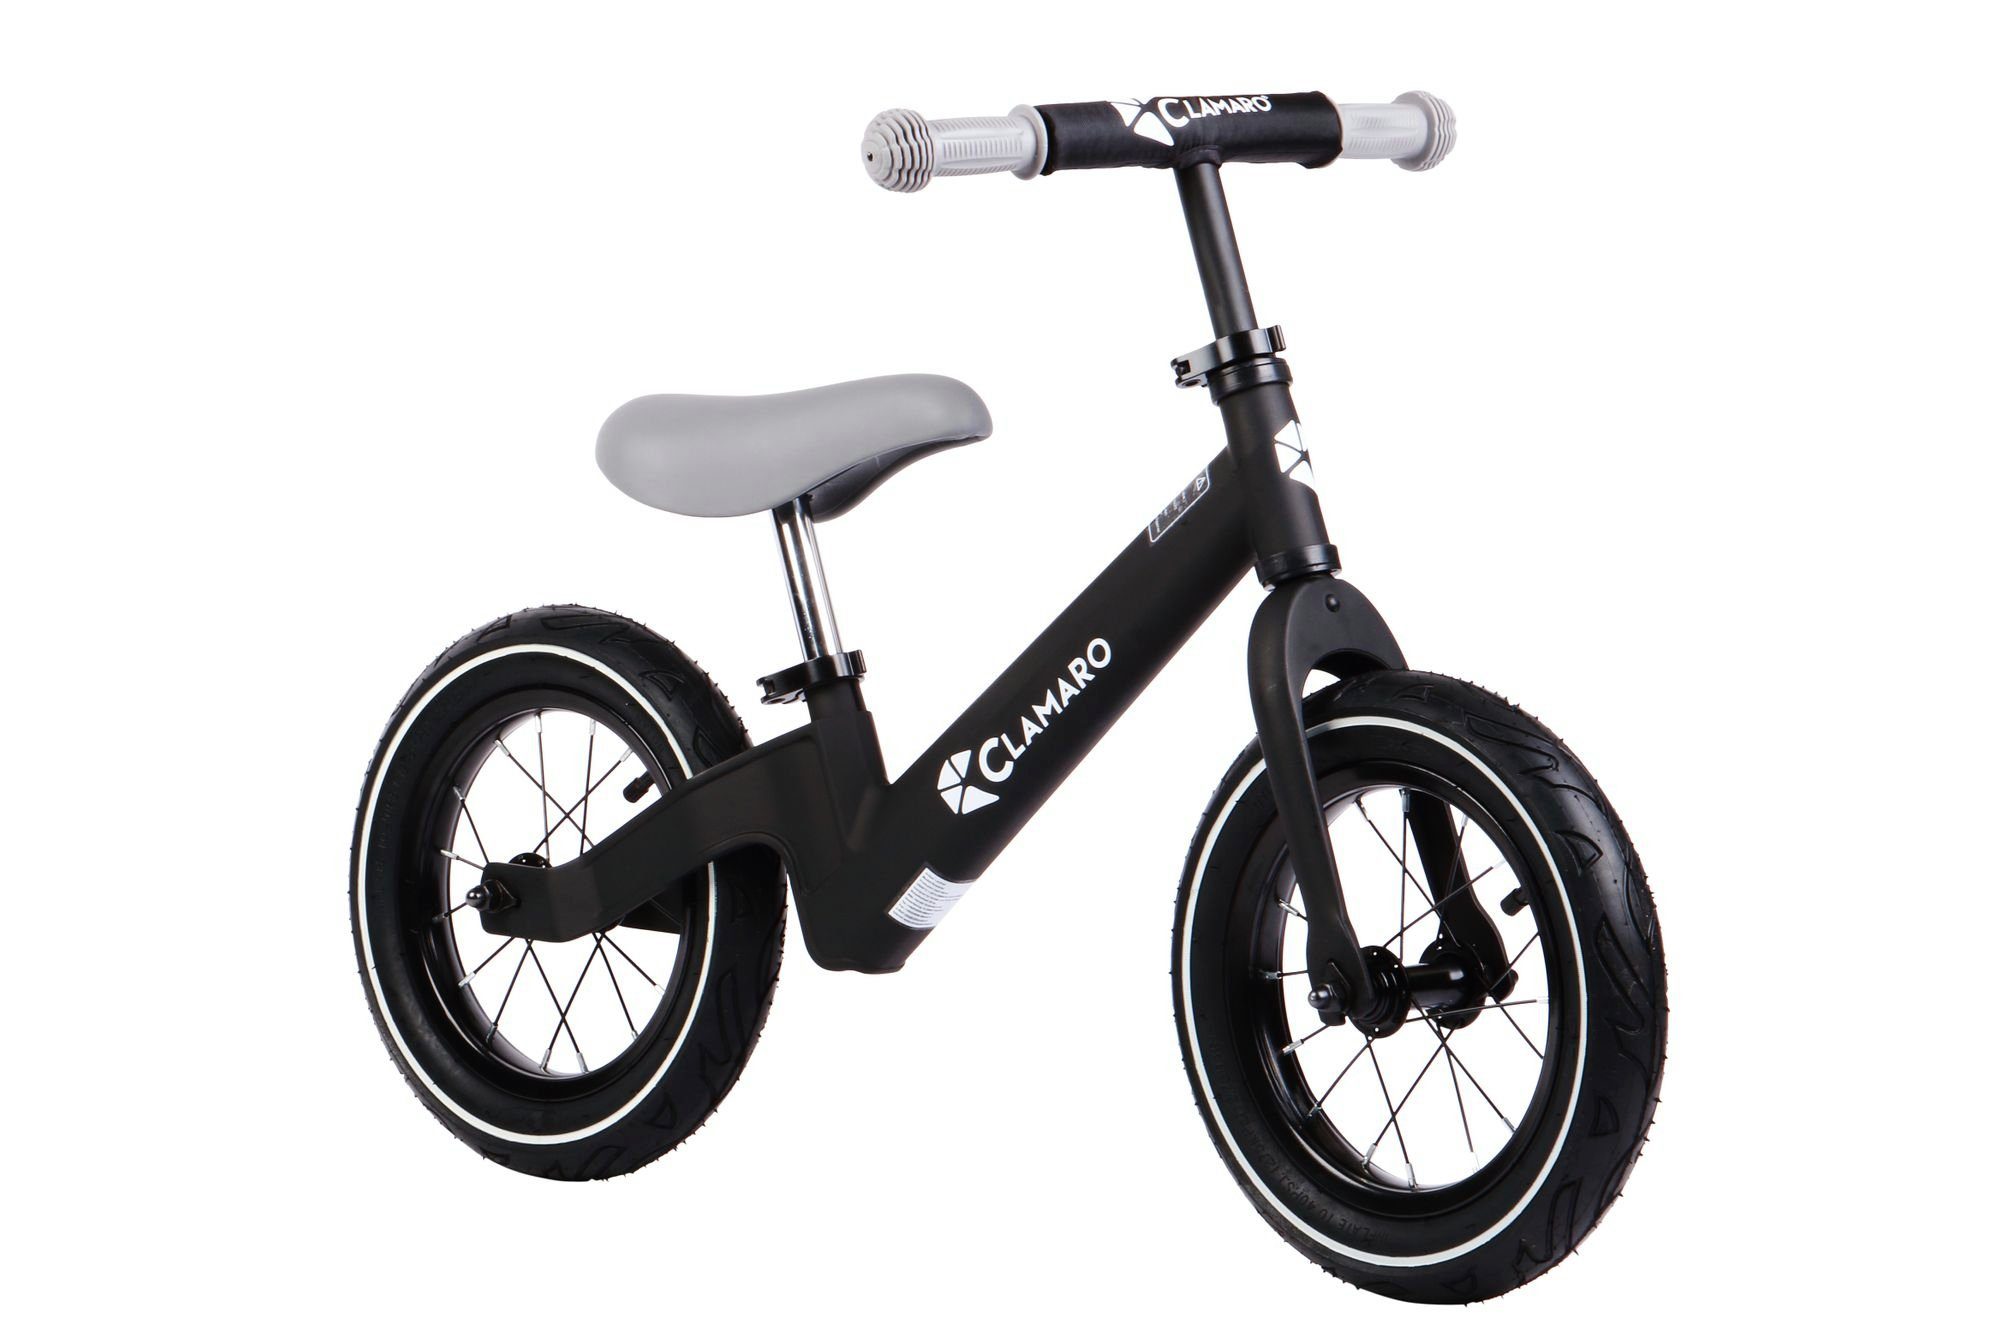 Laufrad Kinder Fahrrad Kinderlaufrad Roadstar mit Luftbereifung 12 Zoll Clamaro 